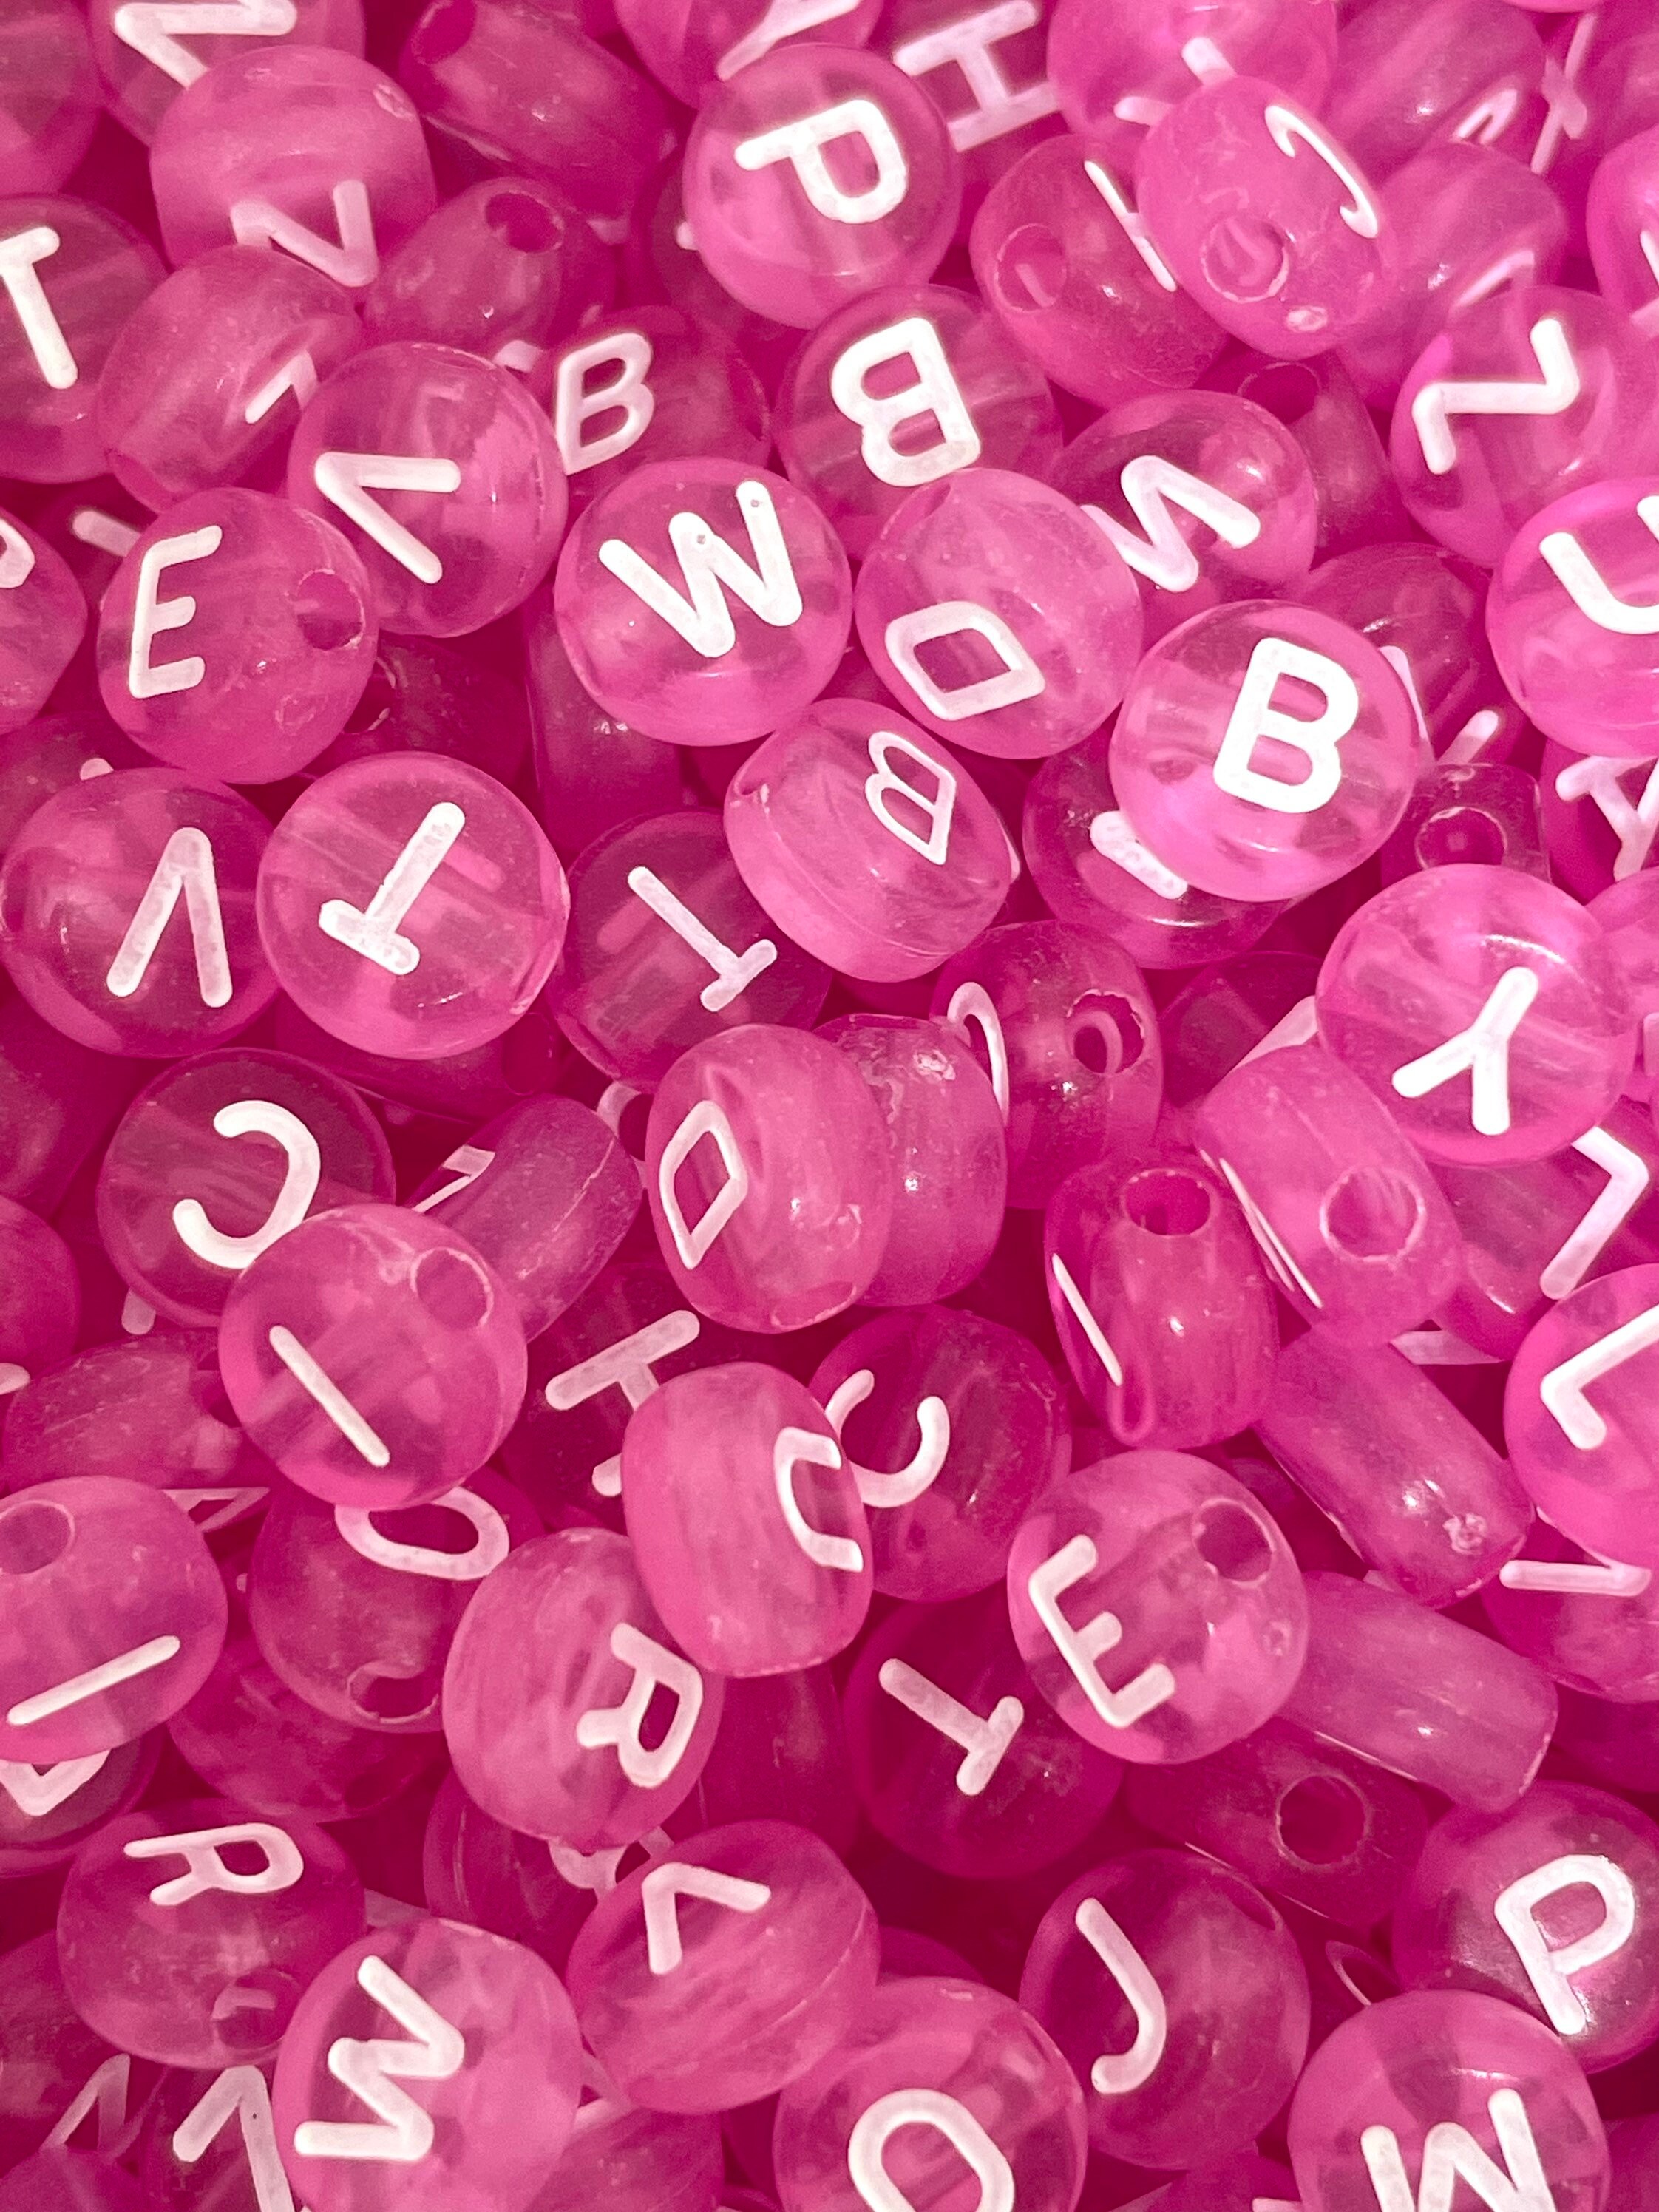 Glitter Alphabet Letter Beads by Melissa Anne